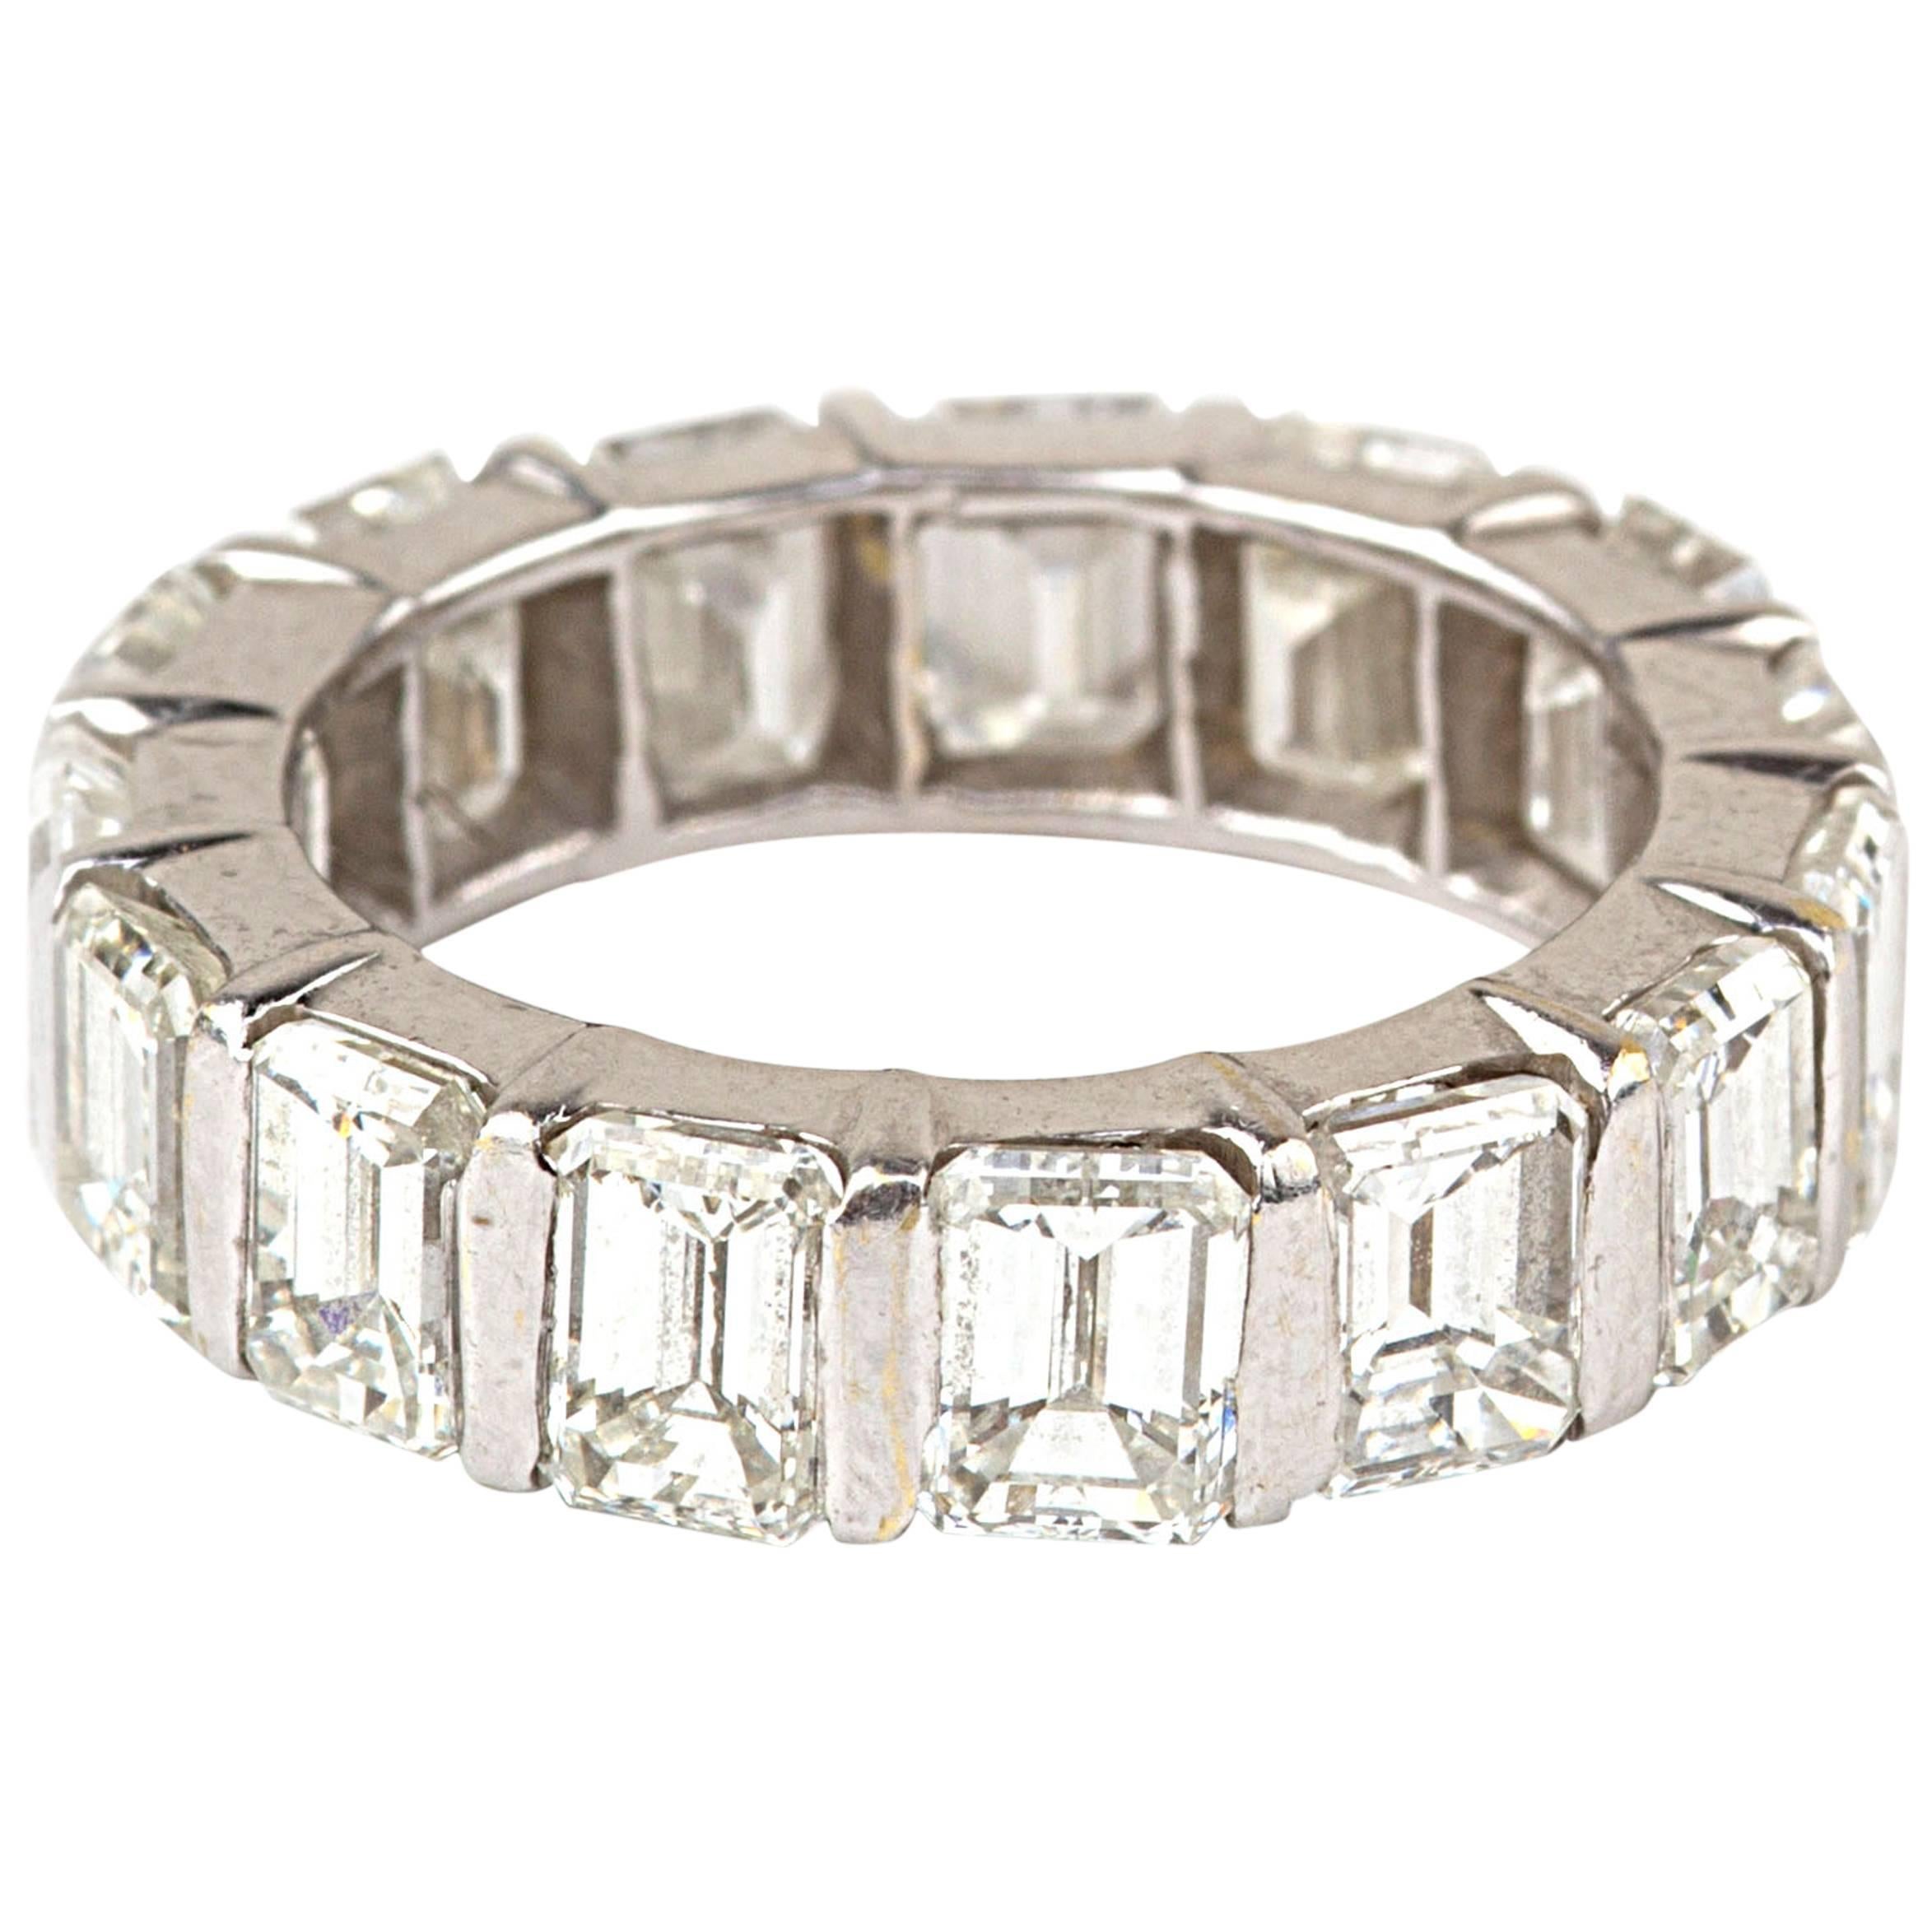  Emerald Cut Diamond 18 Karat White Gold Eternity Band Ring